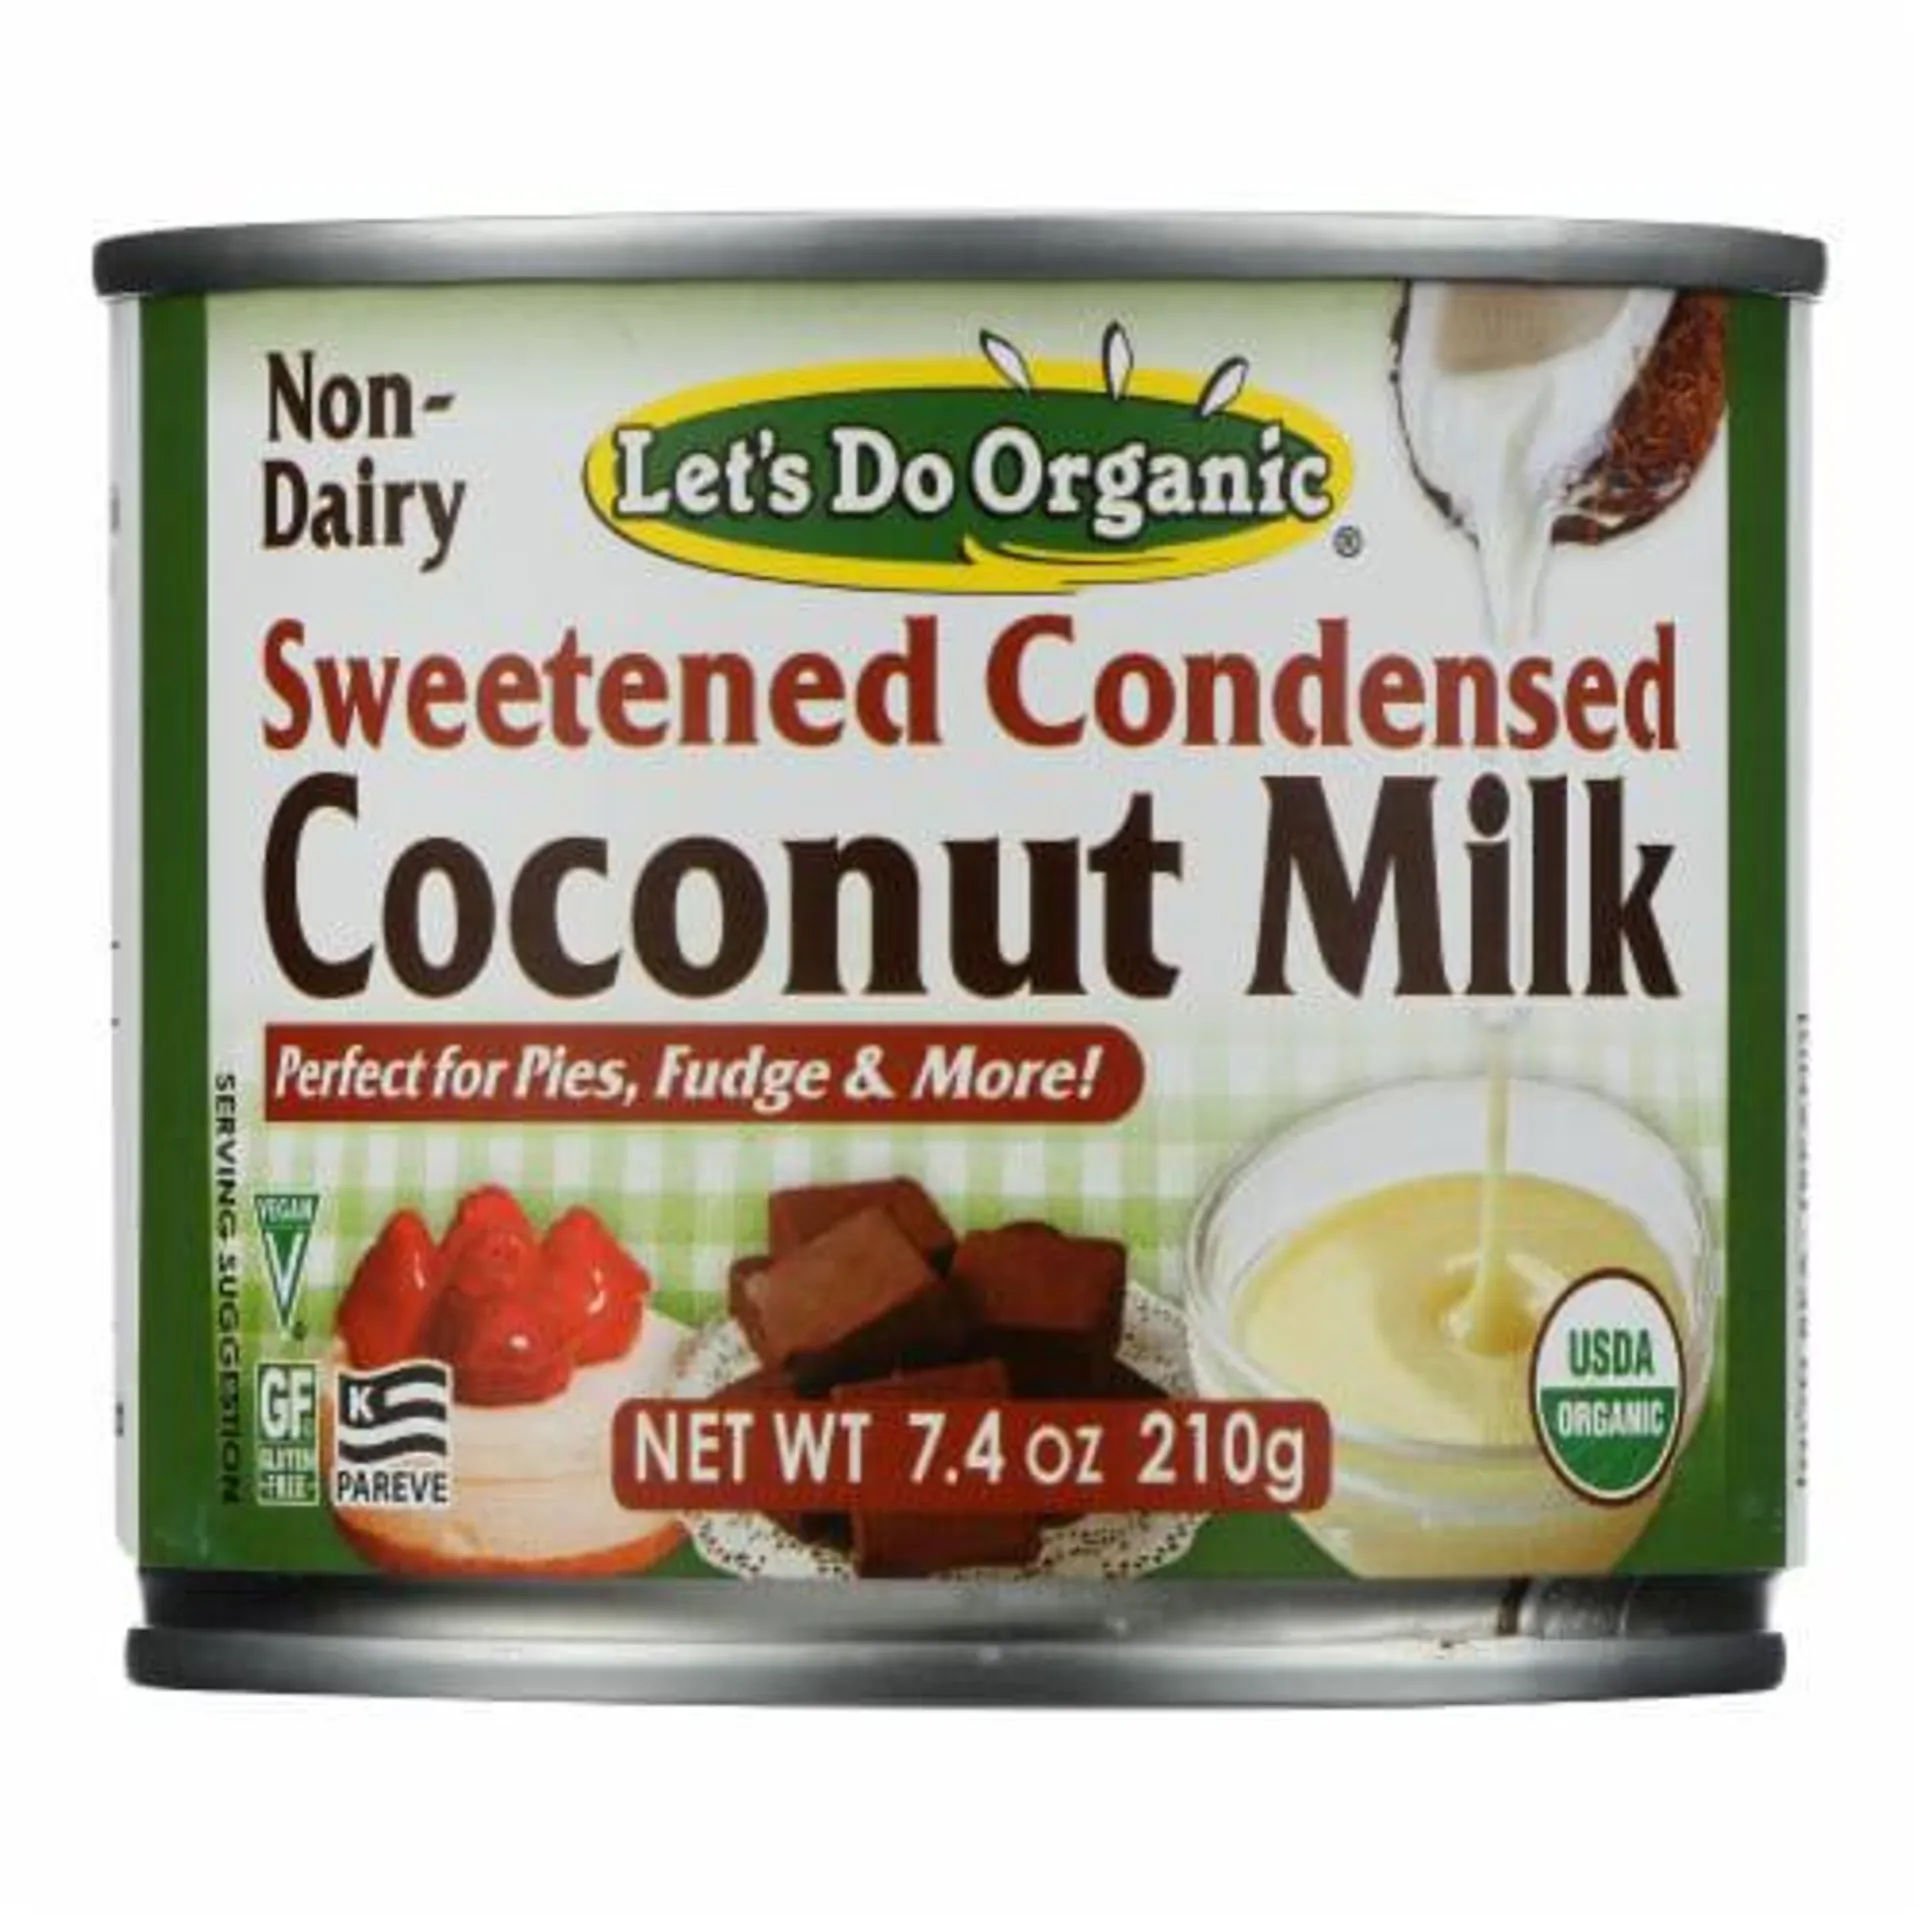 Let's Do Organic Organic Coconut Milk - Sweetened Condensed - Case of 6 - 7.4 fl oz.